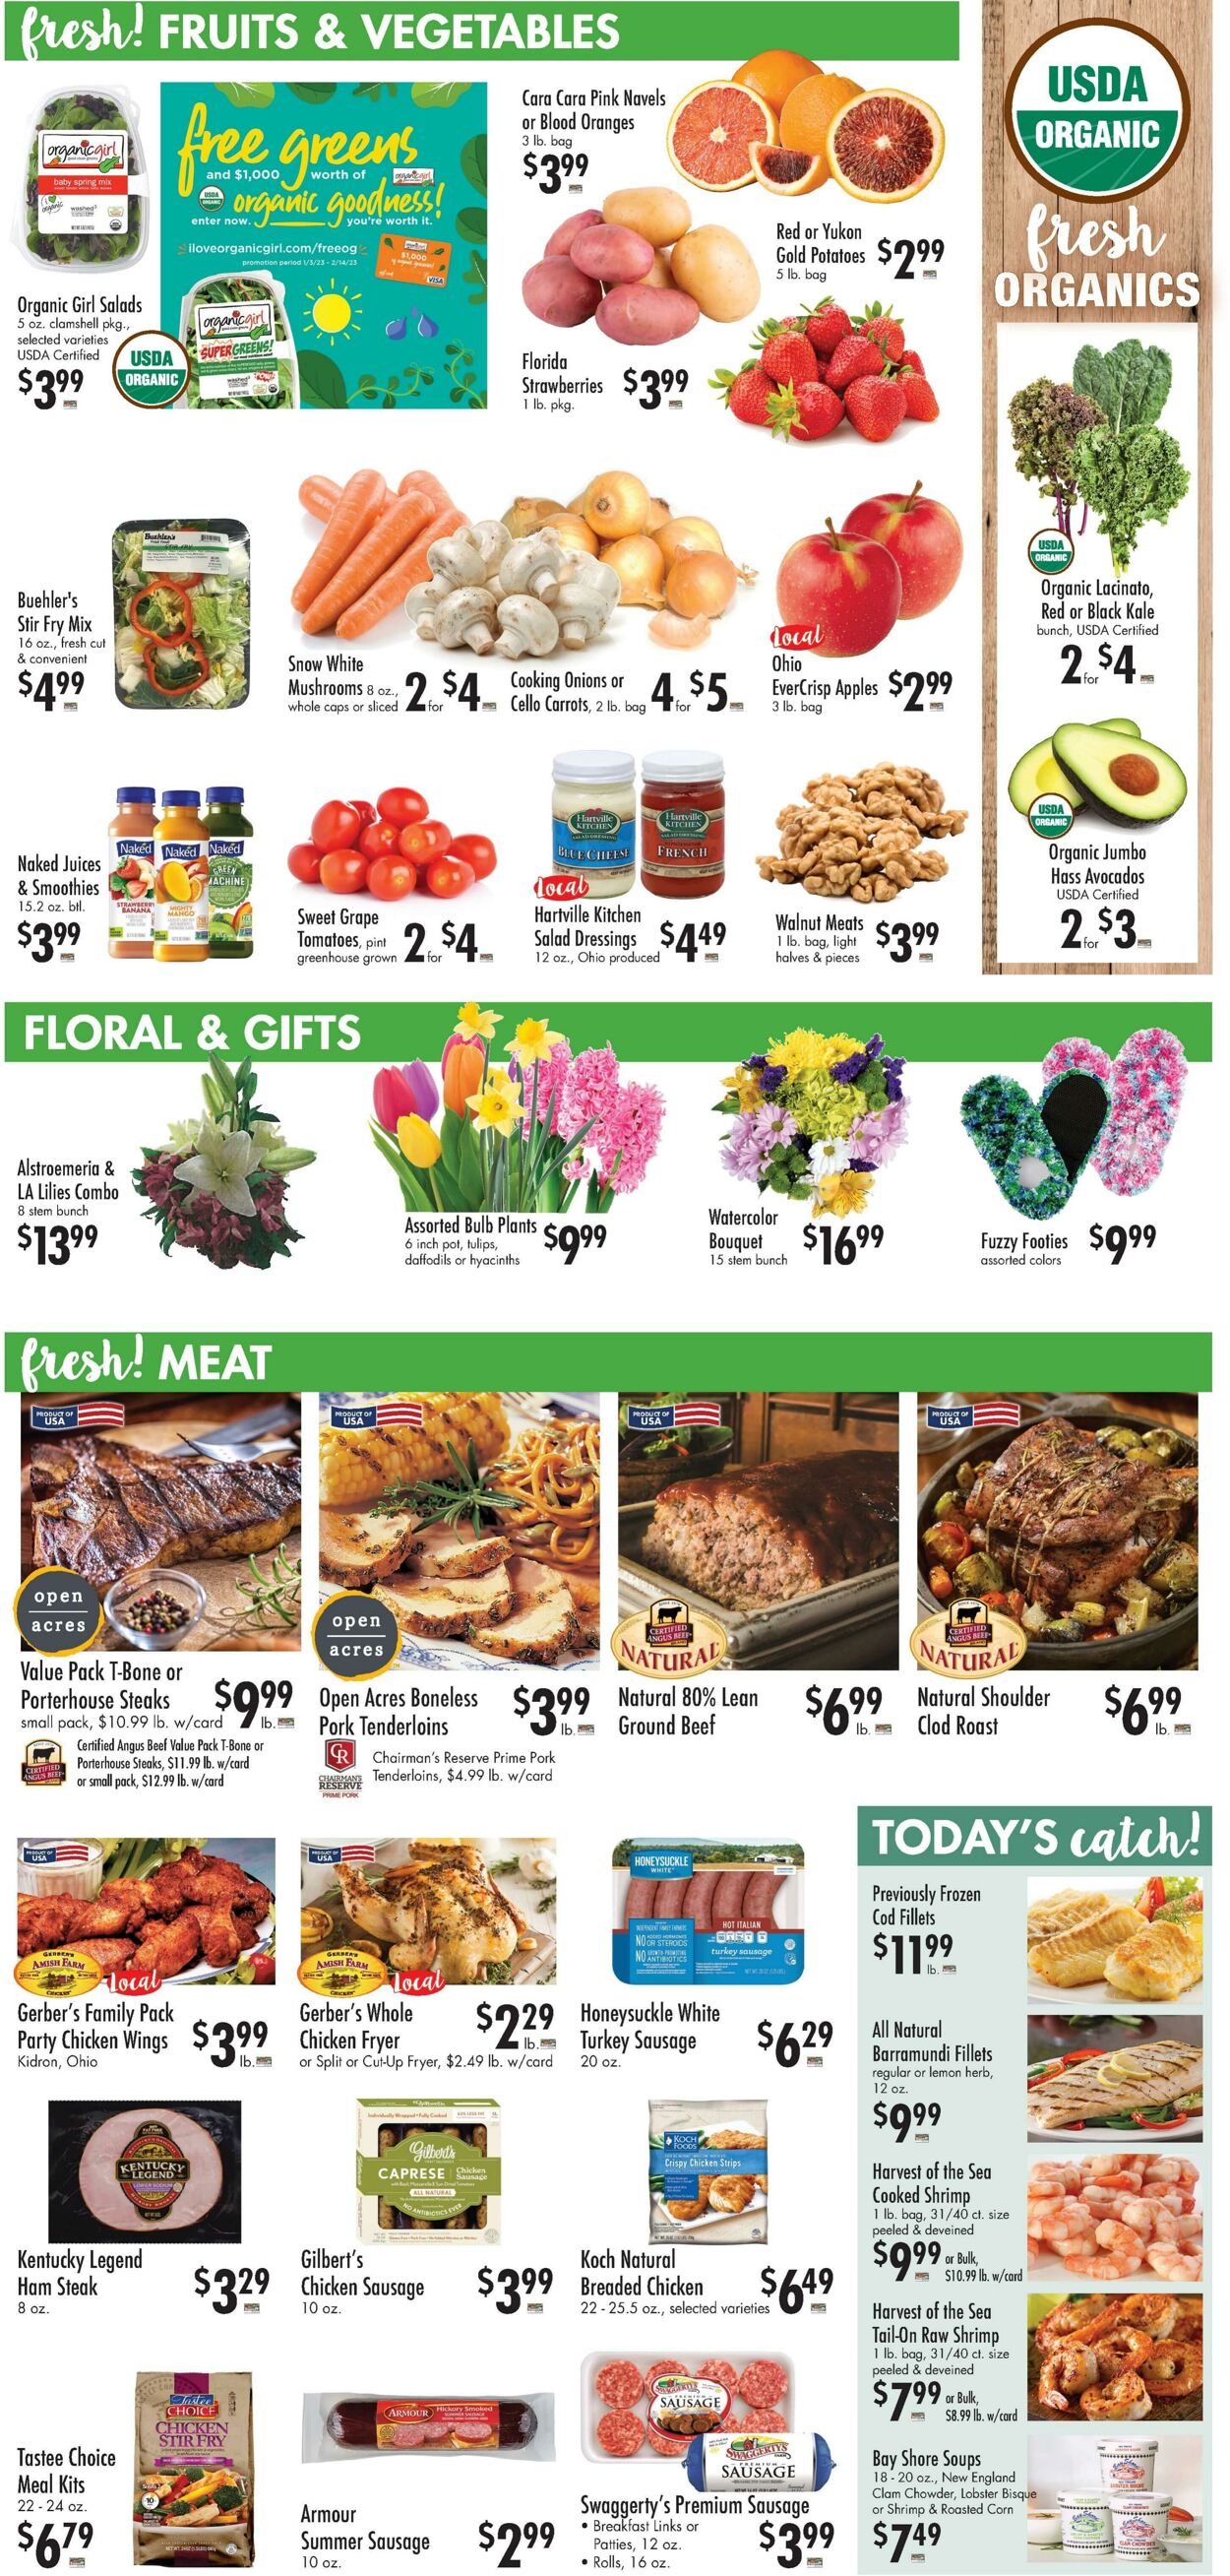 Weekly ad Buehler's Fresh Food 01/11/2023 - 01/17/2023